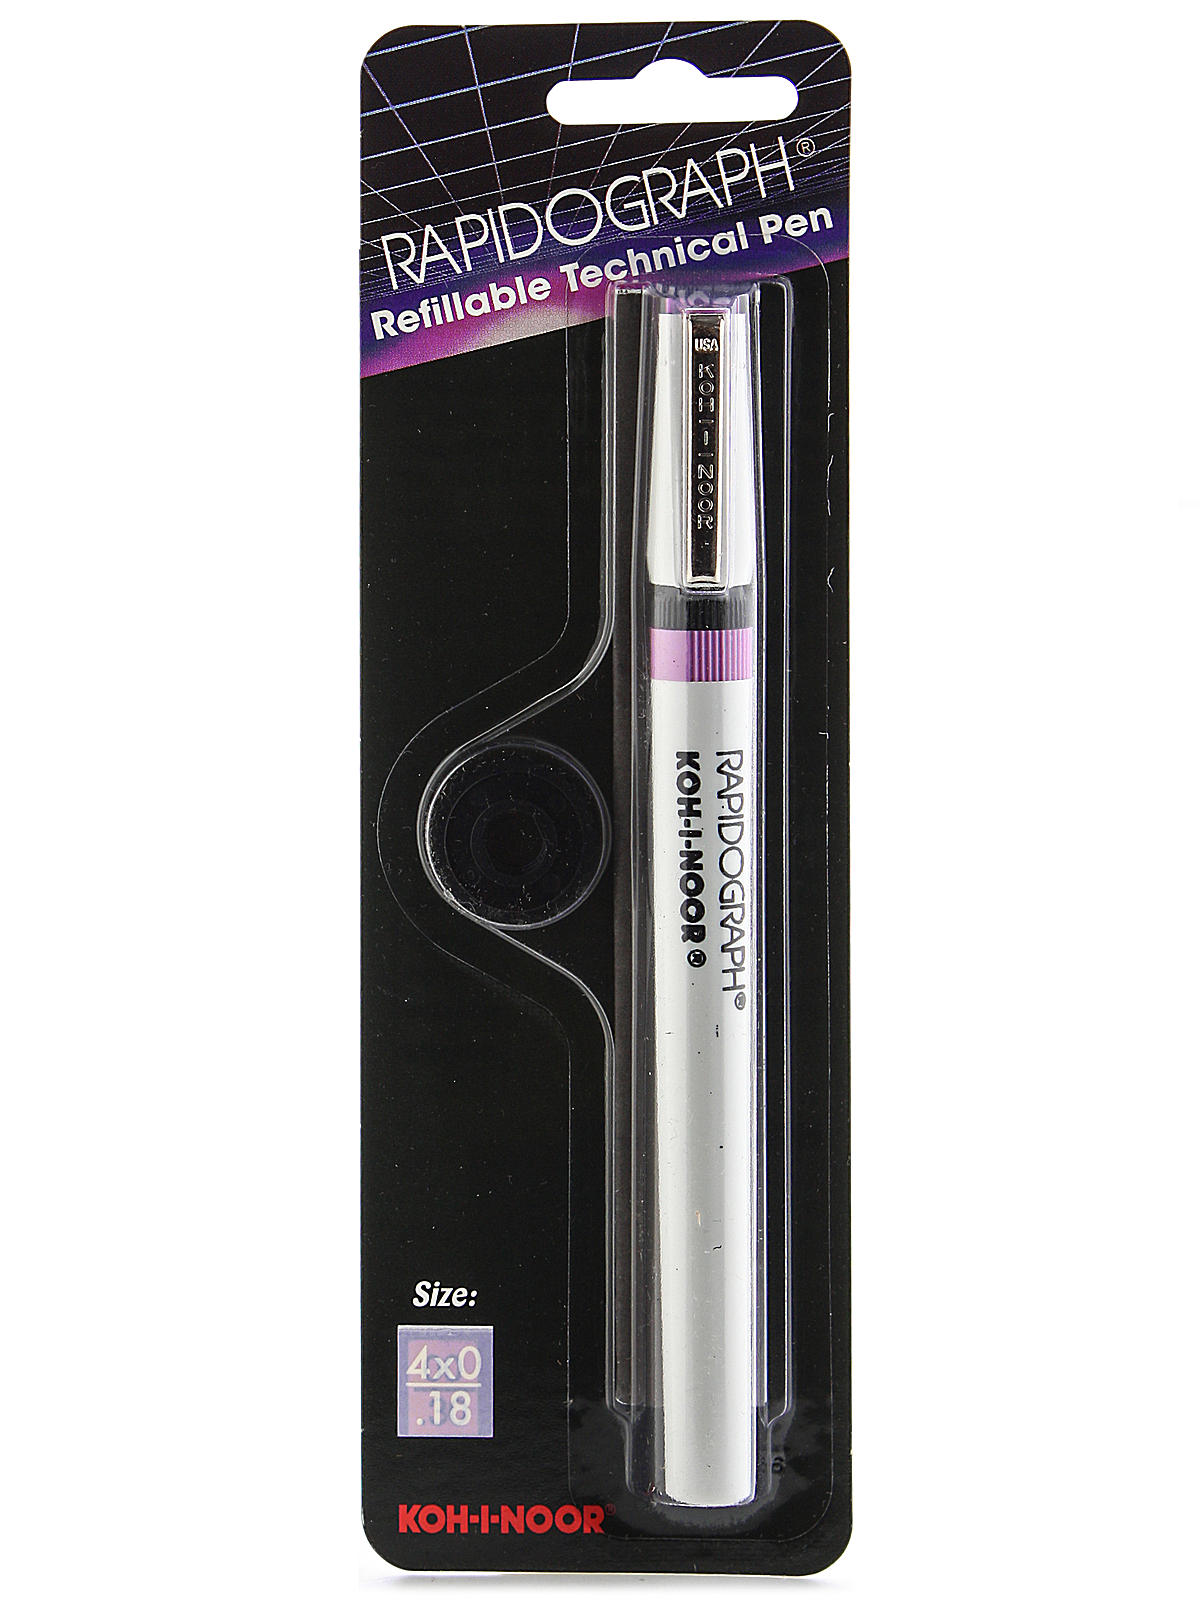 Koh-I-Noor Rapidograph Refillable Technical Pen - 4/0 (0.18mm) by Koh-I-Noor - K. A. Artist Shop